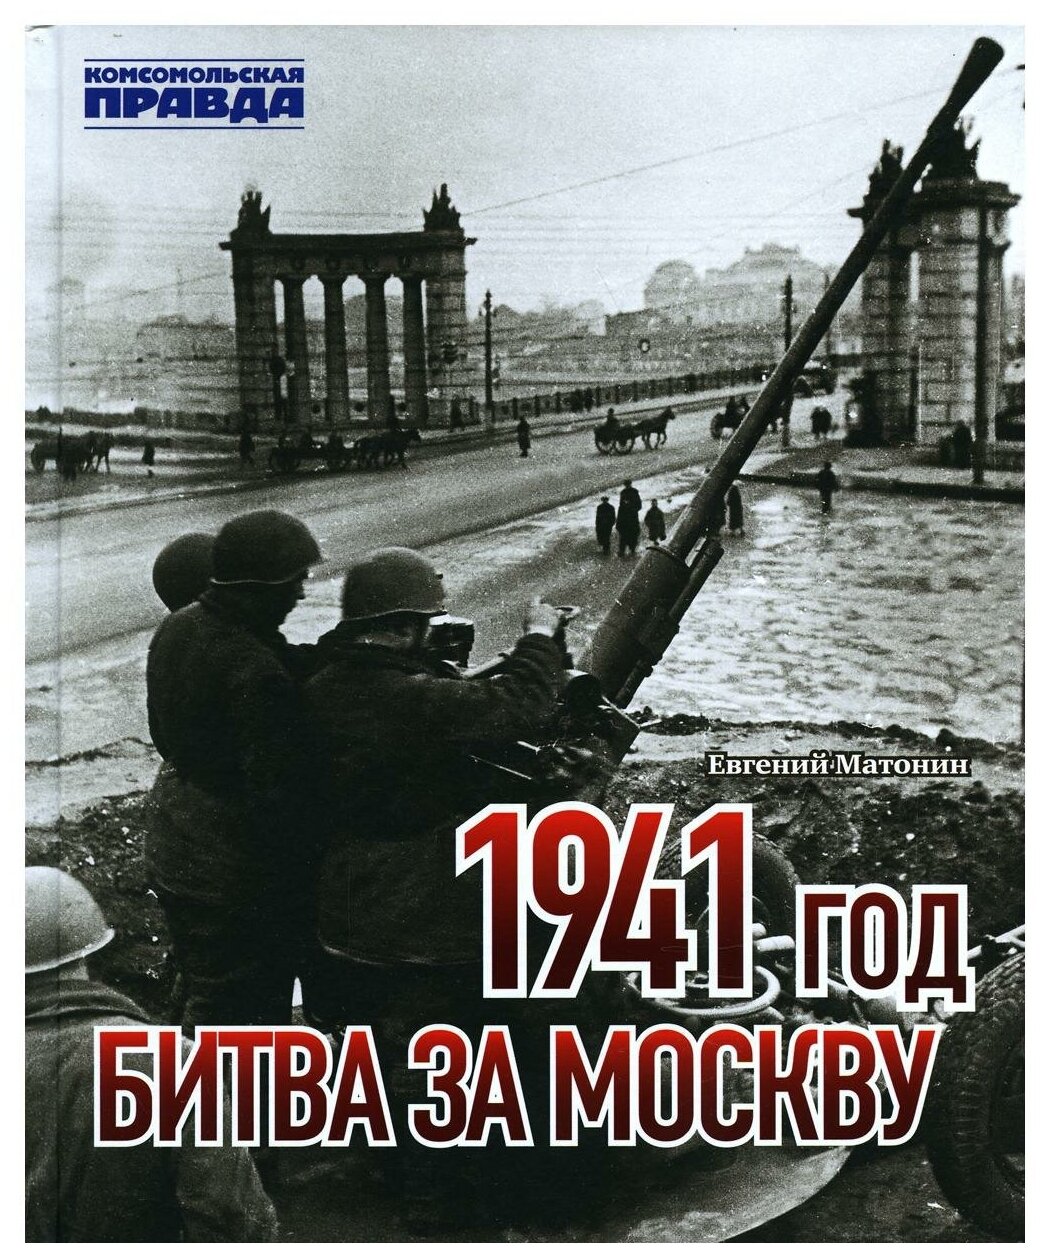 Евгений Матонин: 1941 год. Битва за Москву